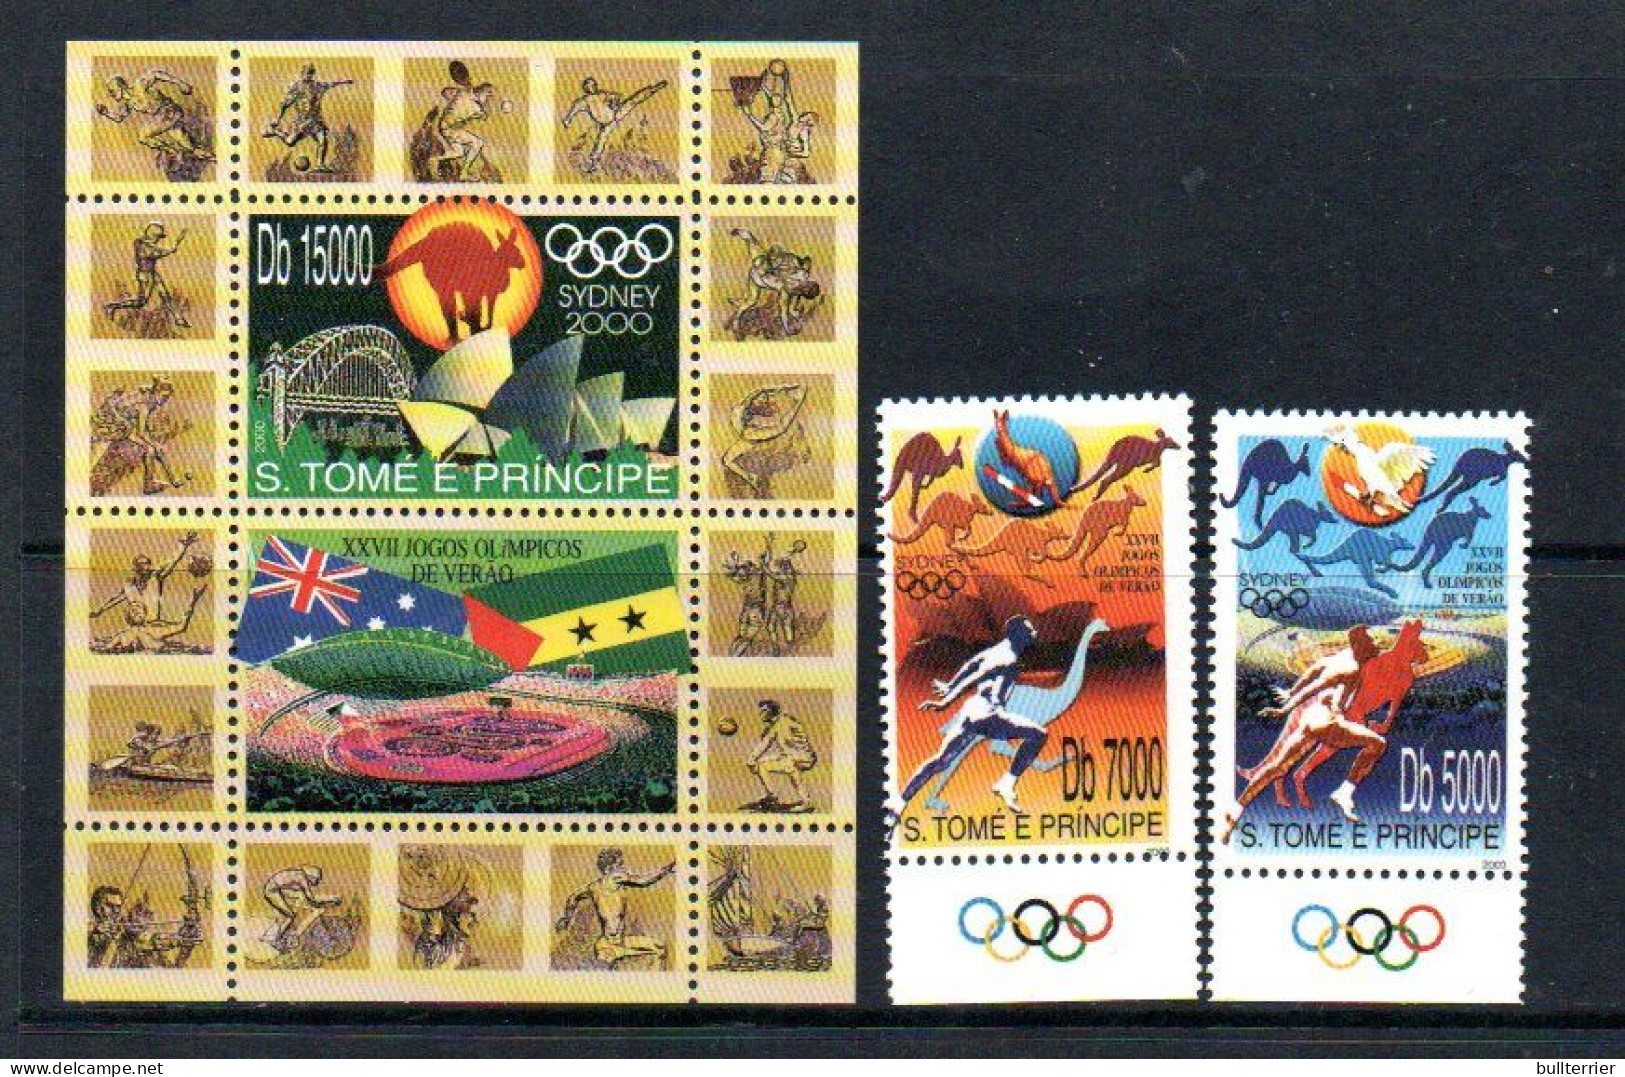 OLYMPICS -  ST HOMAS PRINCE -  2000-Sydney Olympics Set Of 2 + S/sheet  Mint Never Hinged - Zomer 2000: Sydney